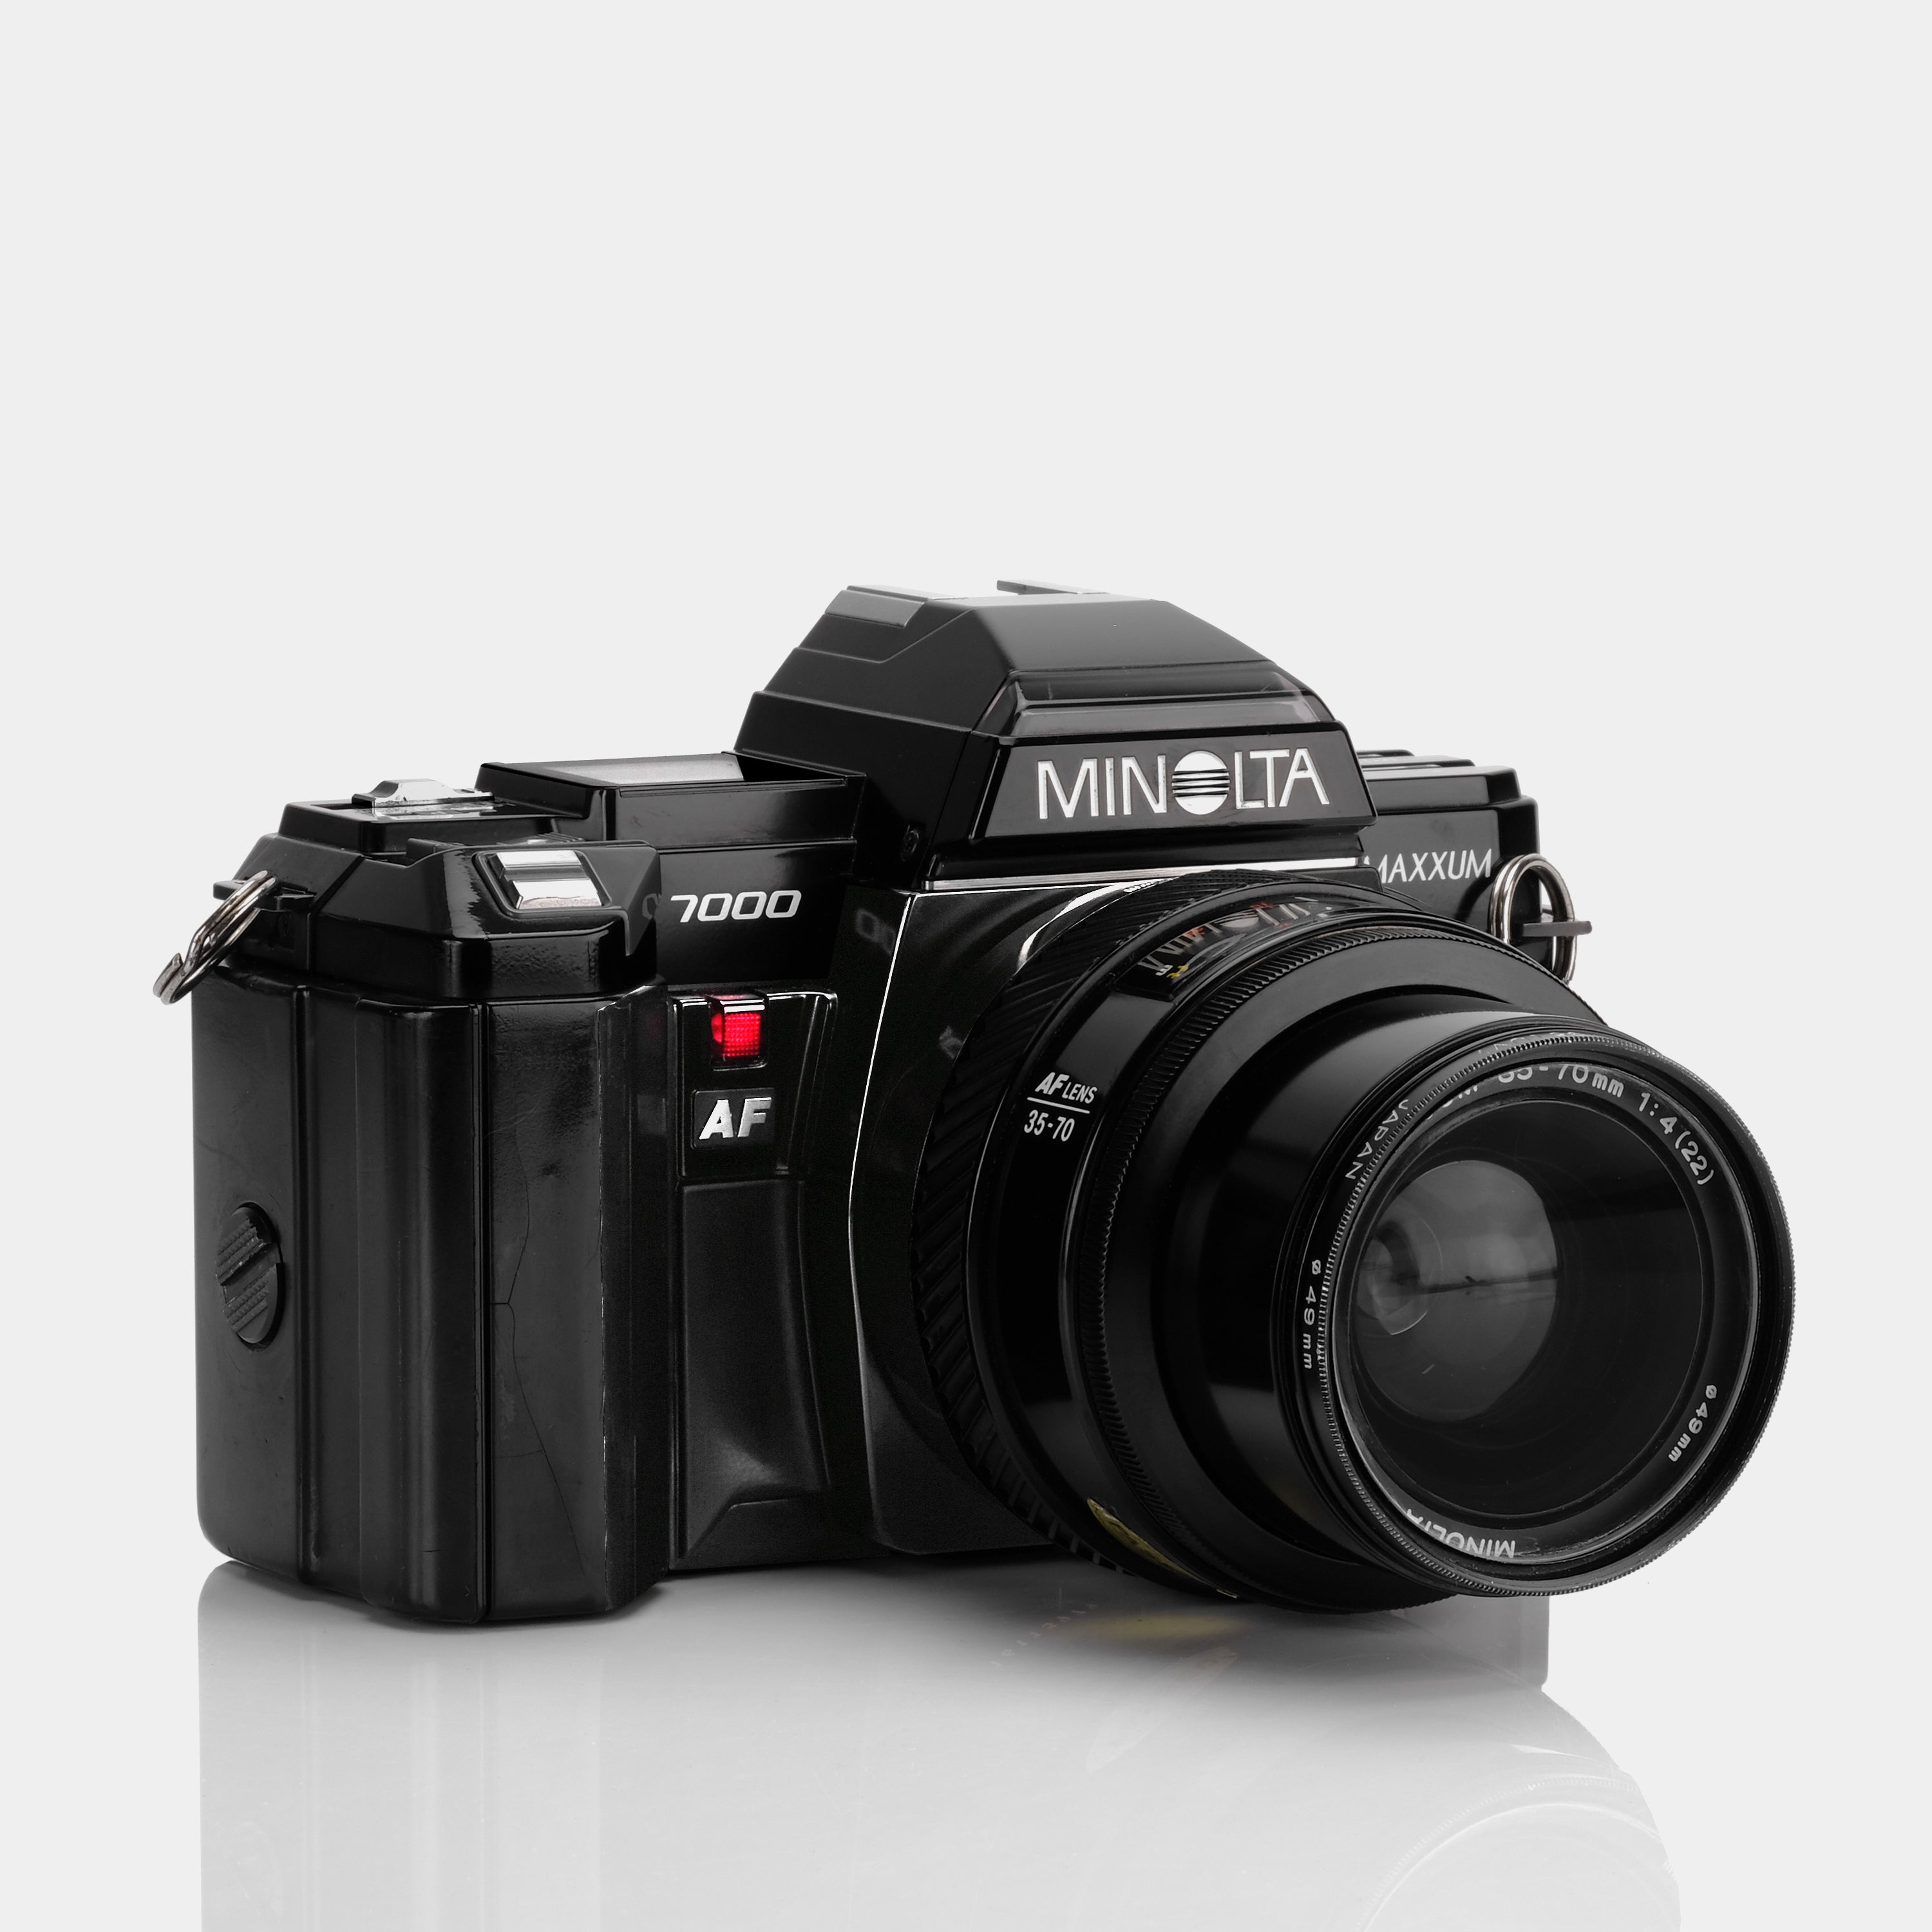 Minolta Maxxum 7000 SLR 35mm Film Camera With Lenses